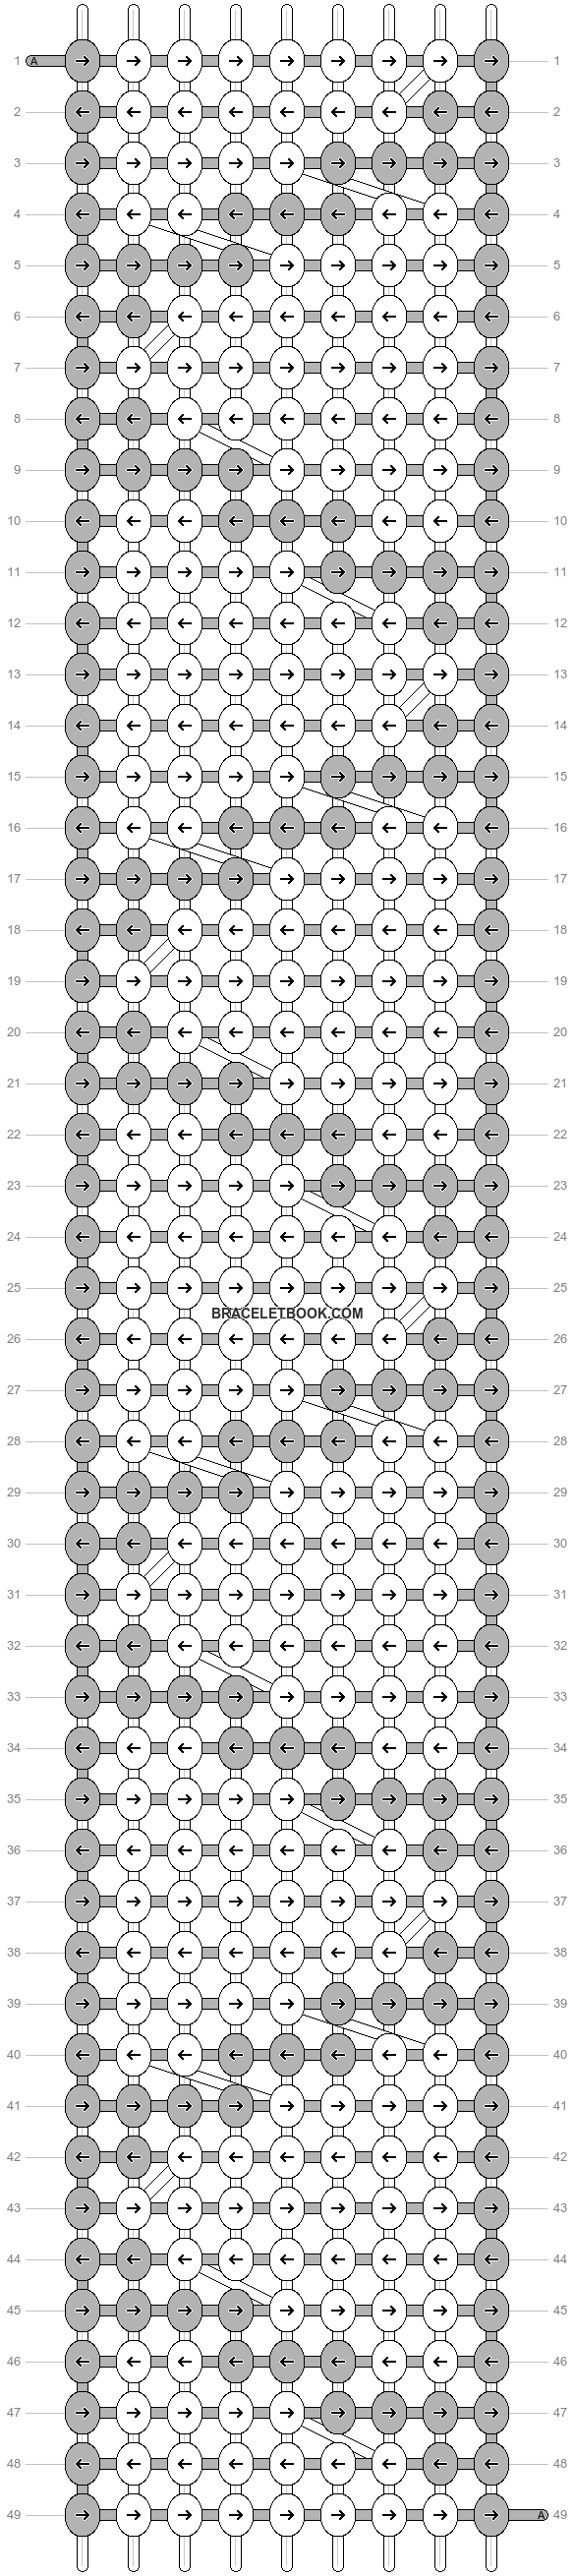 Alpha pattern #17862 variation #43811 pattern